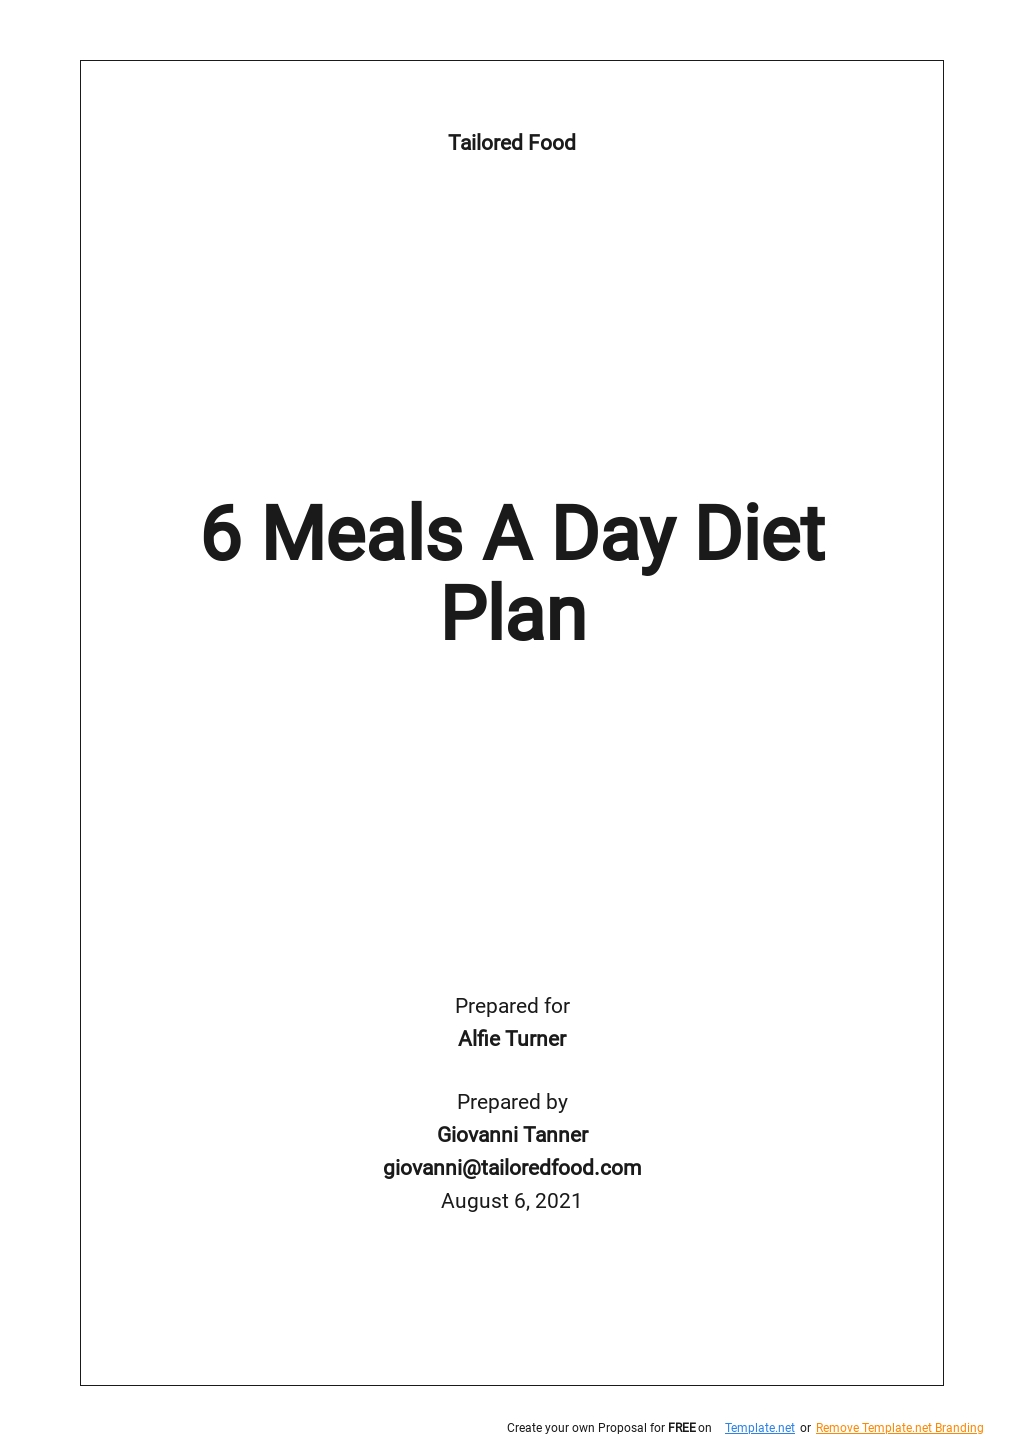 6 Meals A Day Diet Plan Template.jpe